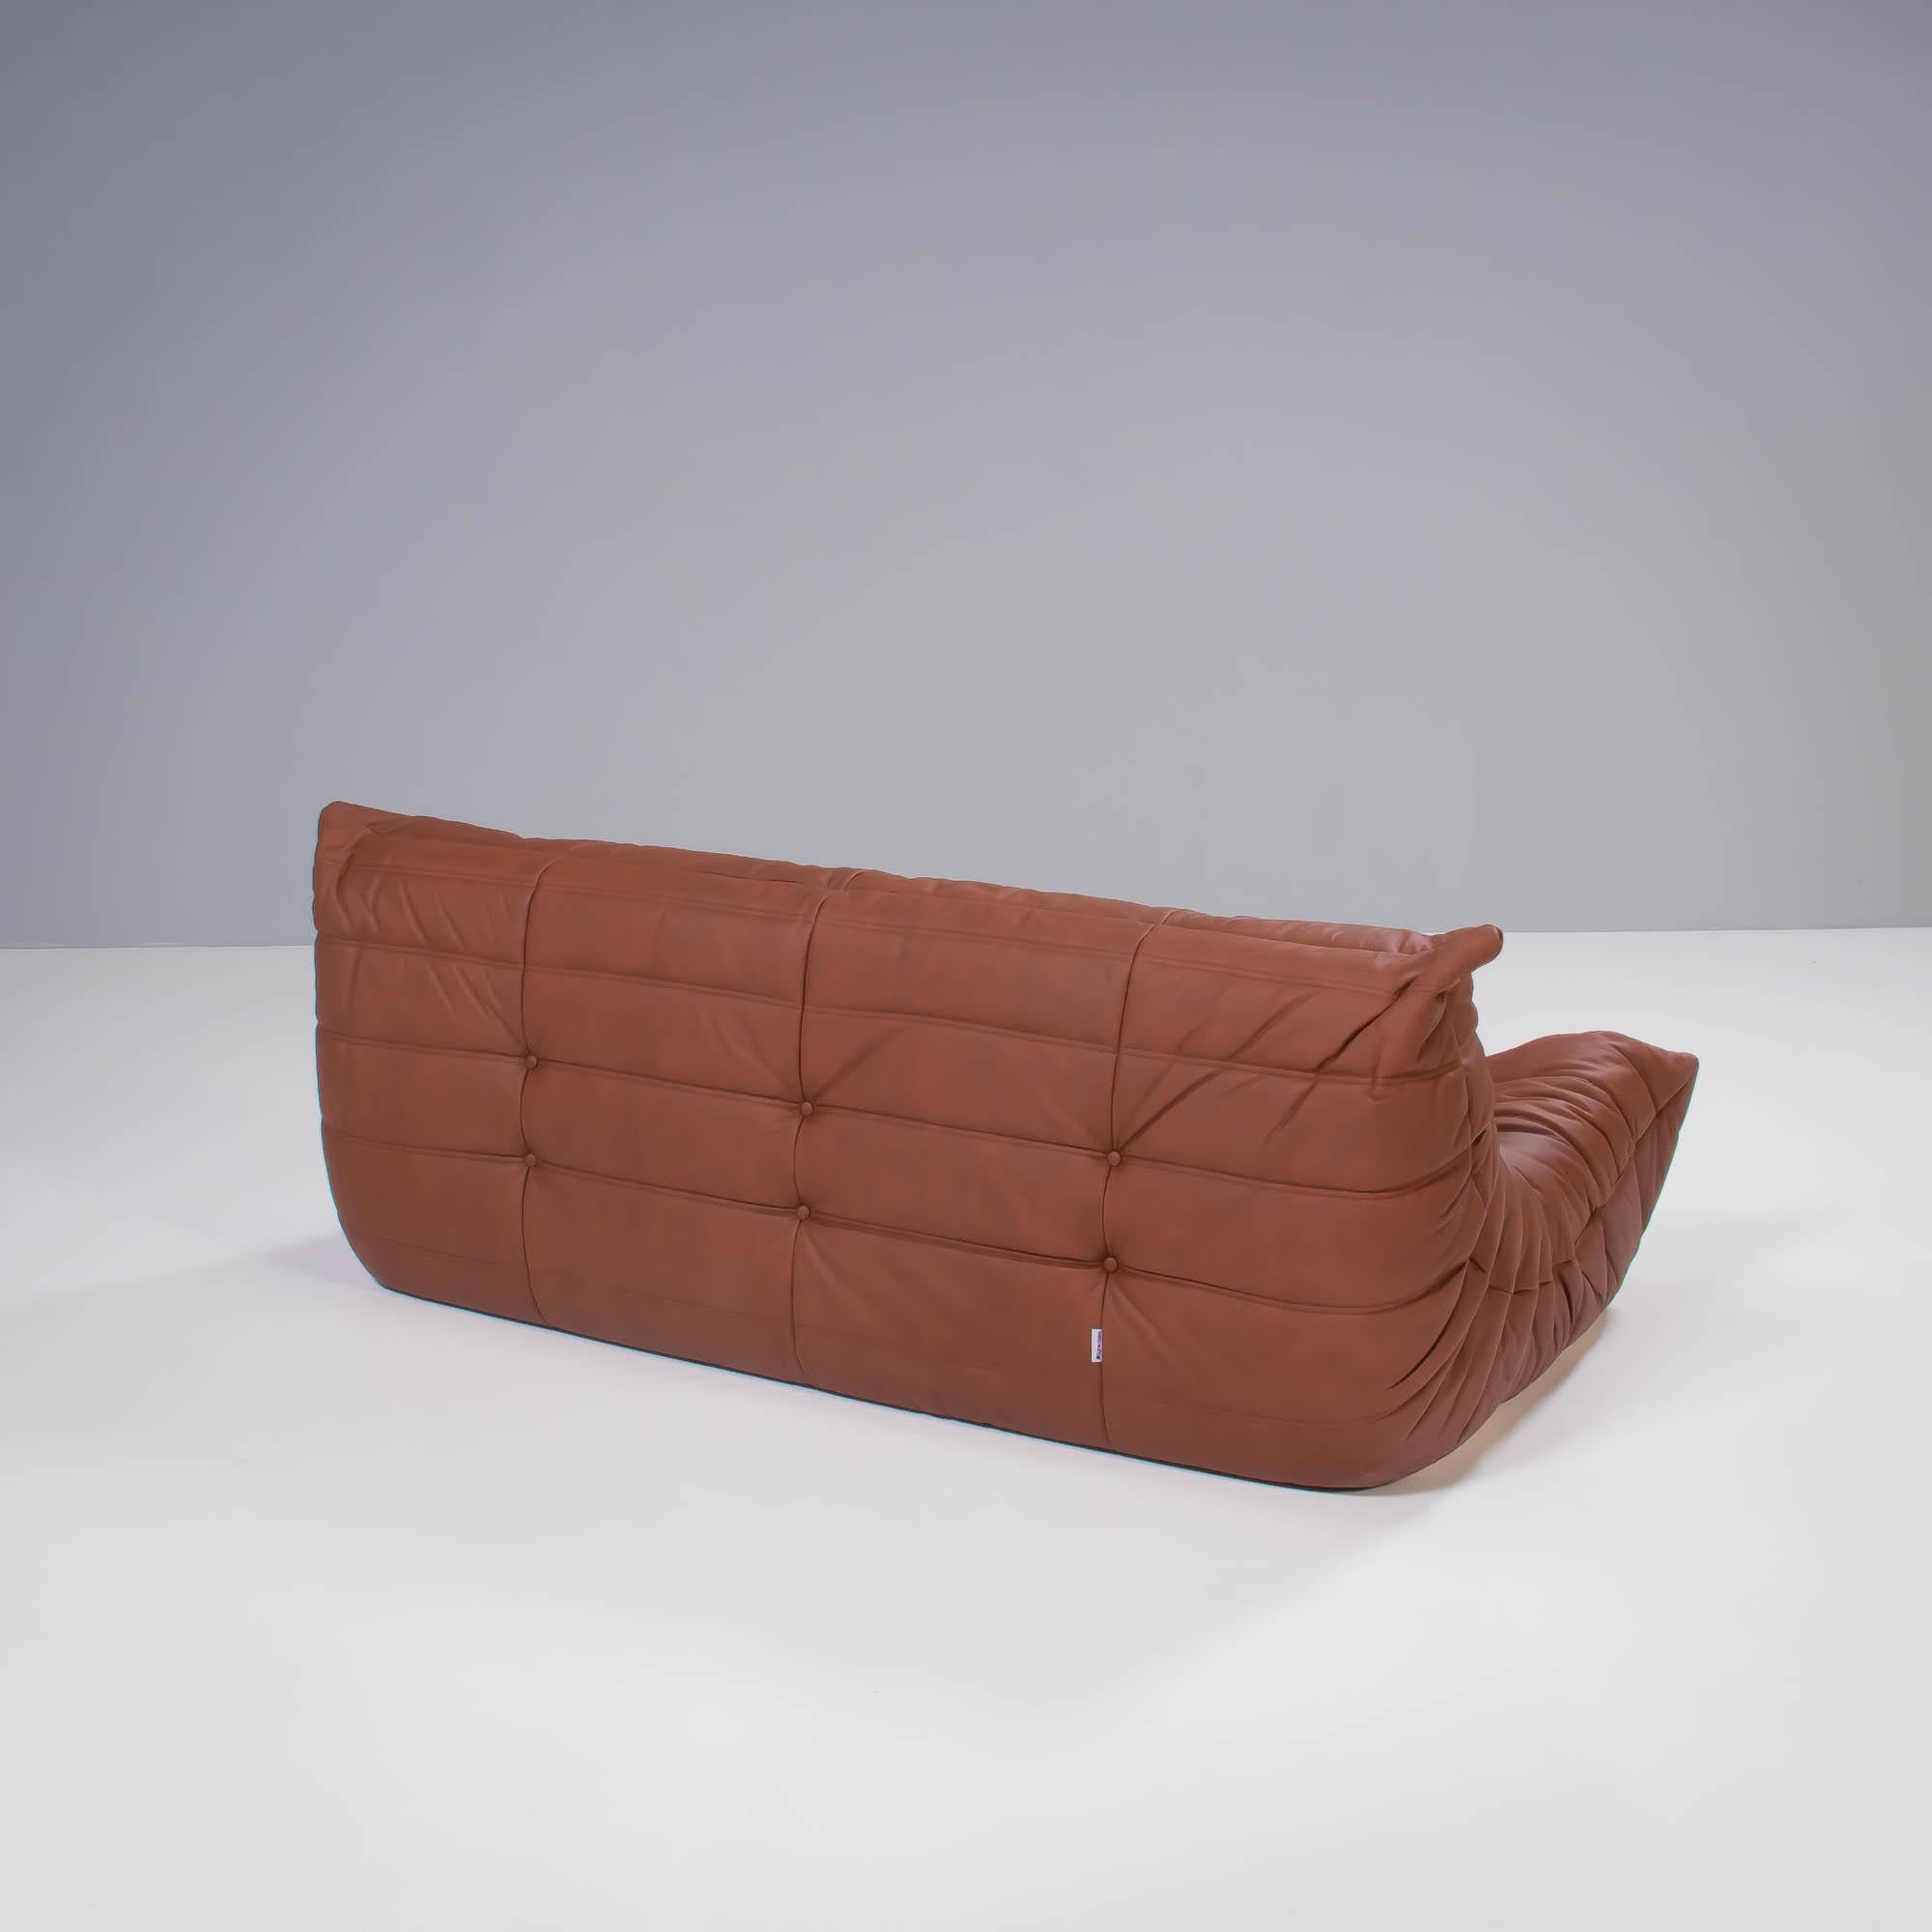 Ligne Roset by Michel Ducaroy Togo Brown Leather Modular Sofa, Set of 5 For Sale 2